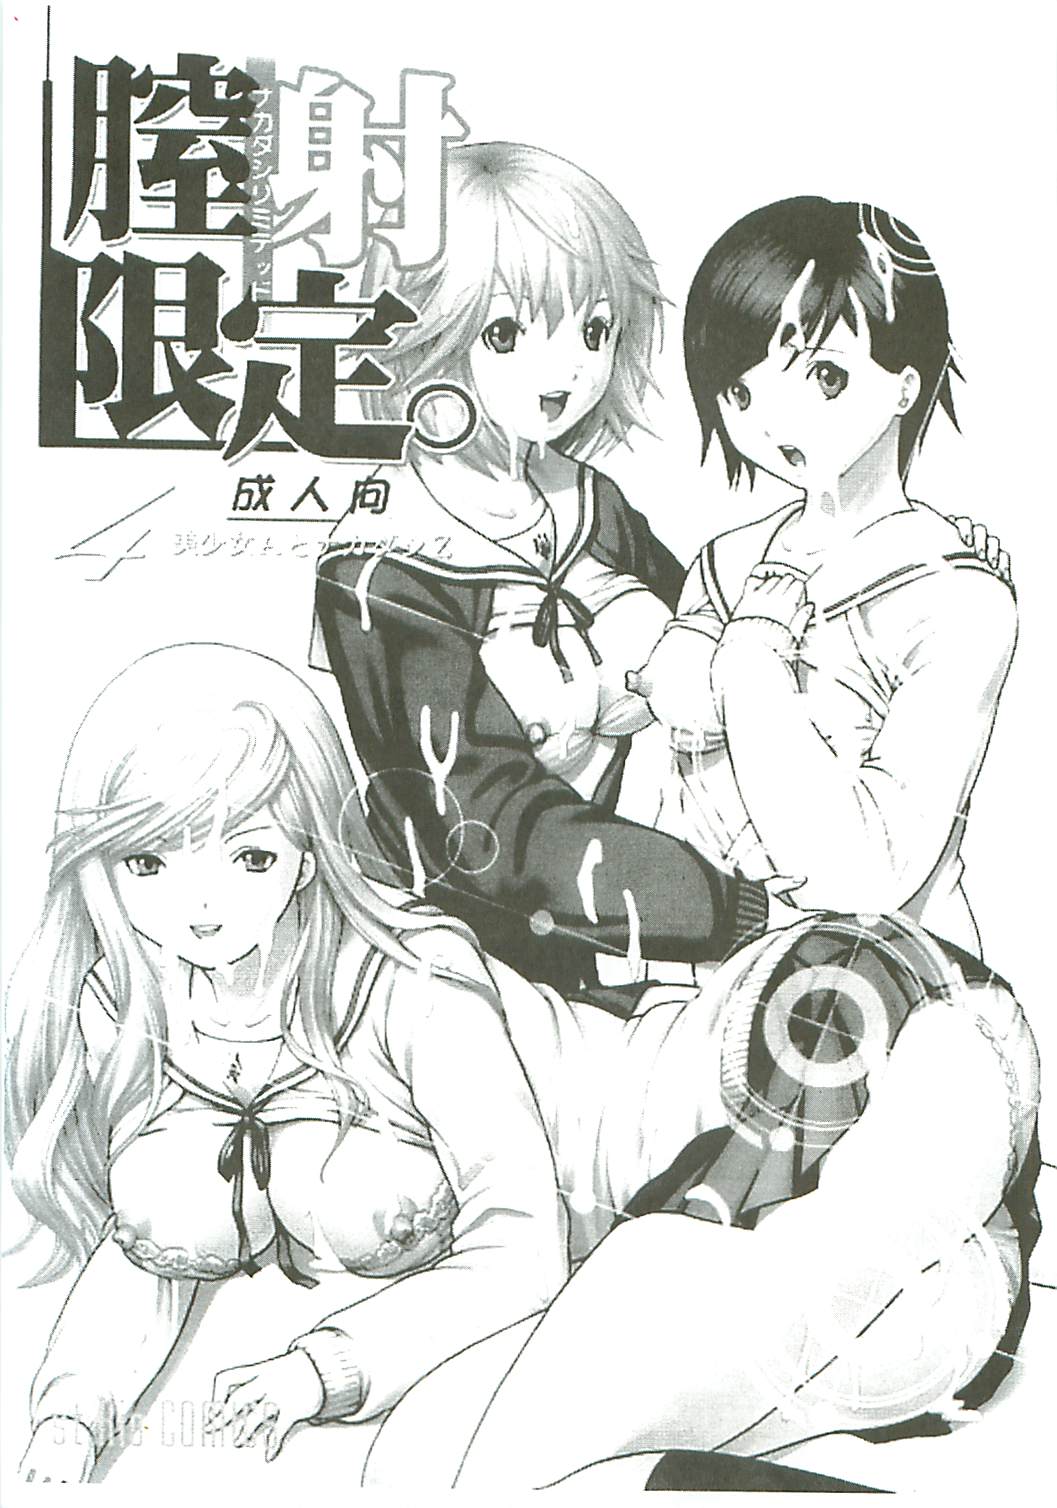 [St. Rio] Chitsui Gentei Nakadashi Limited vol.4 (Hatsukoi Limited) 